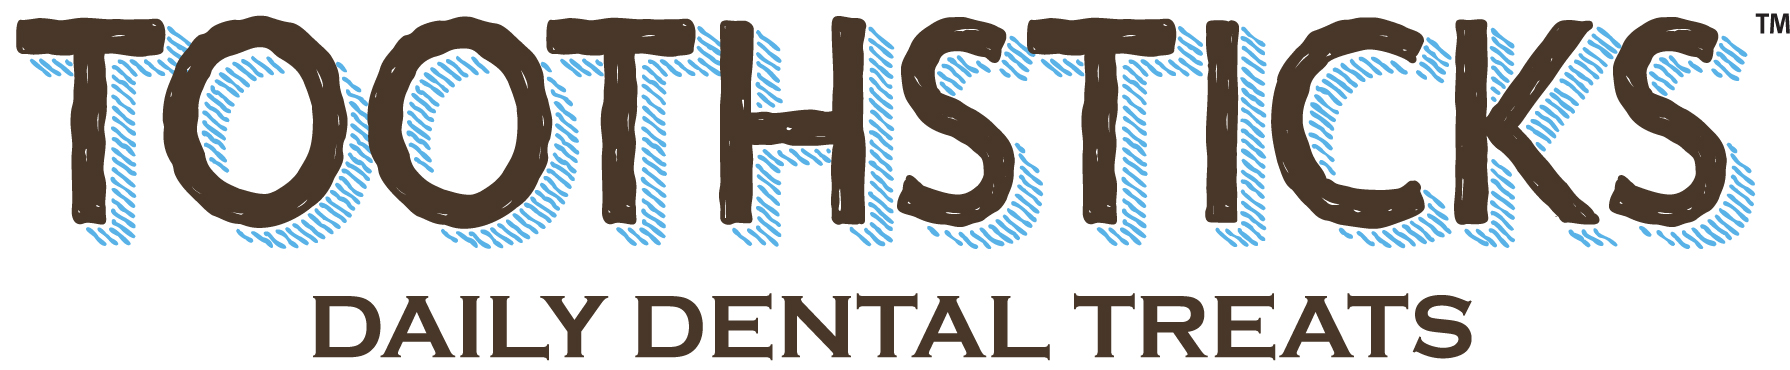 Toothsticks Logo Image